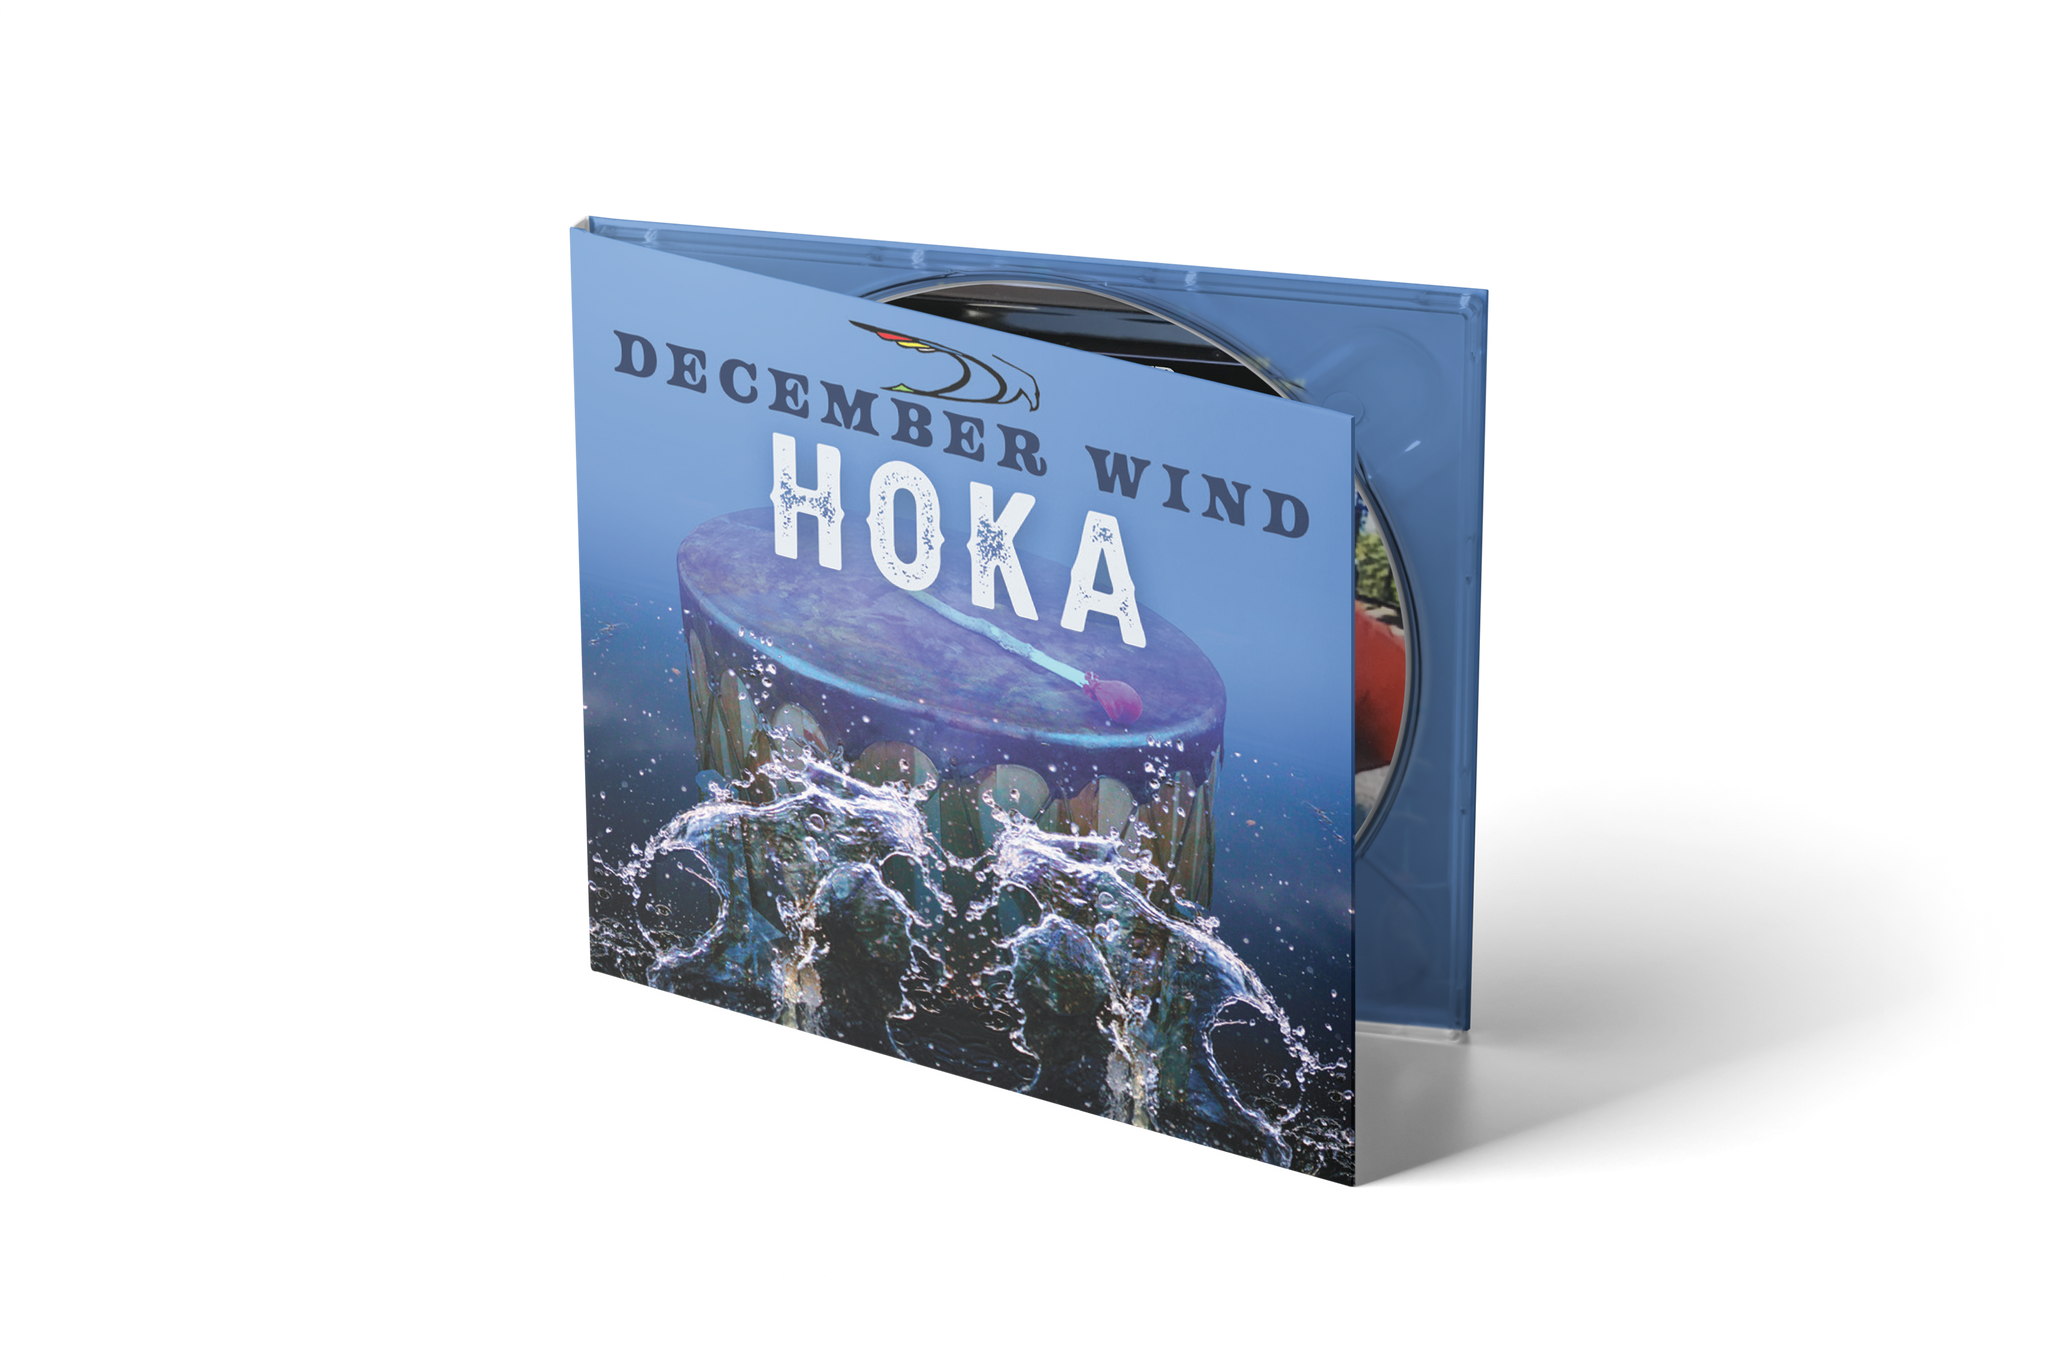 December Wind "Hoka" CD